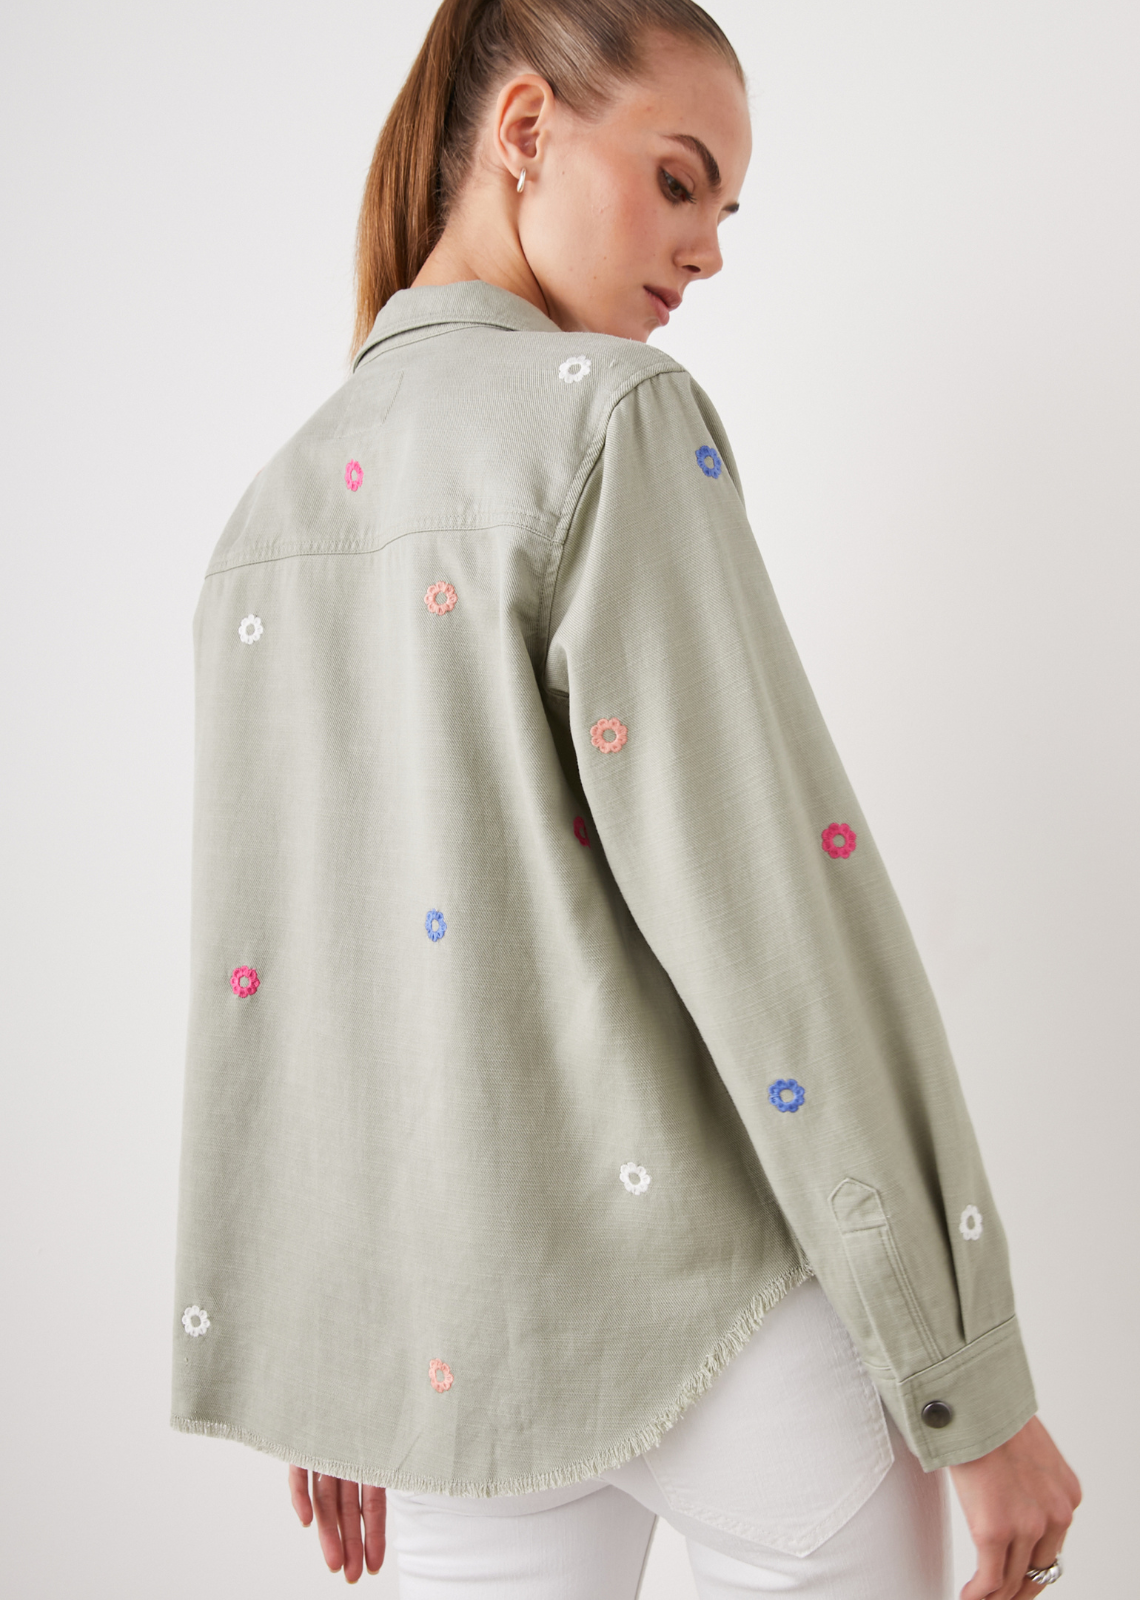 Rails Loren Jacket - Olive Embroidered Daisy